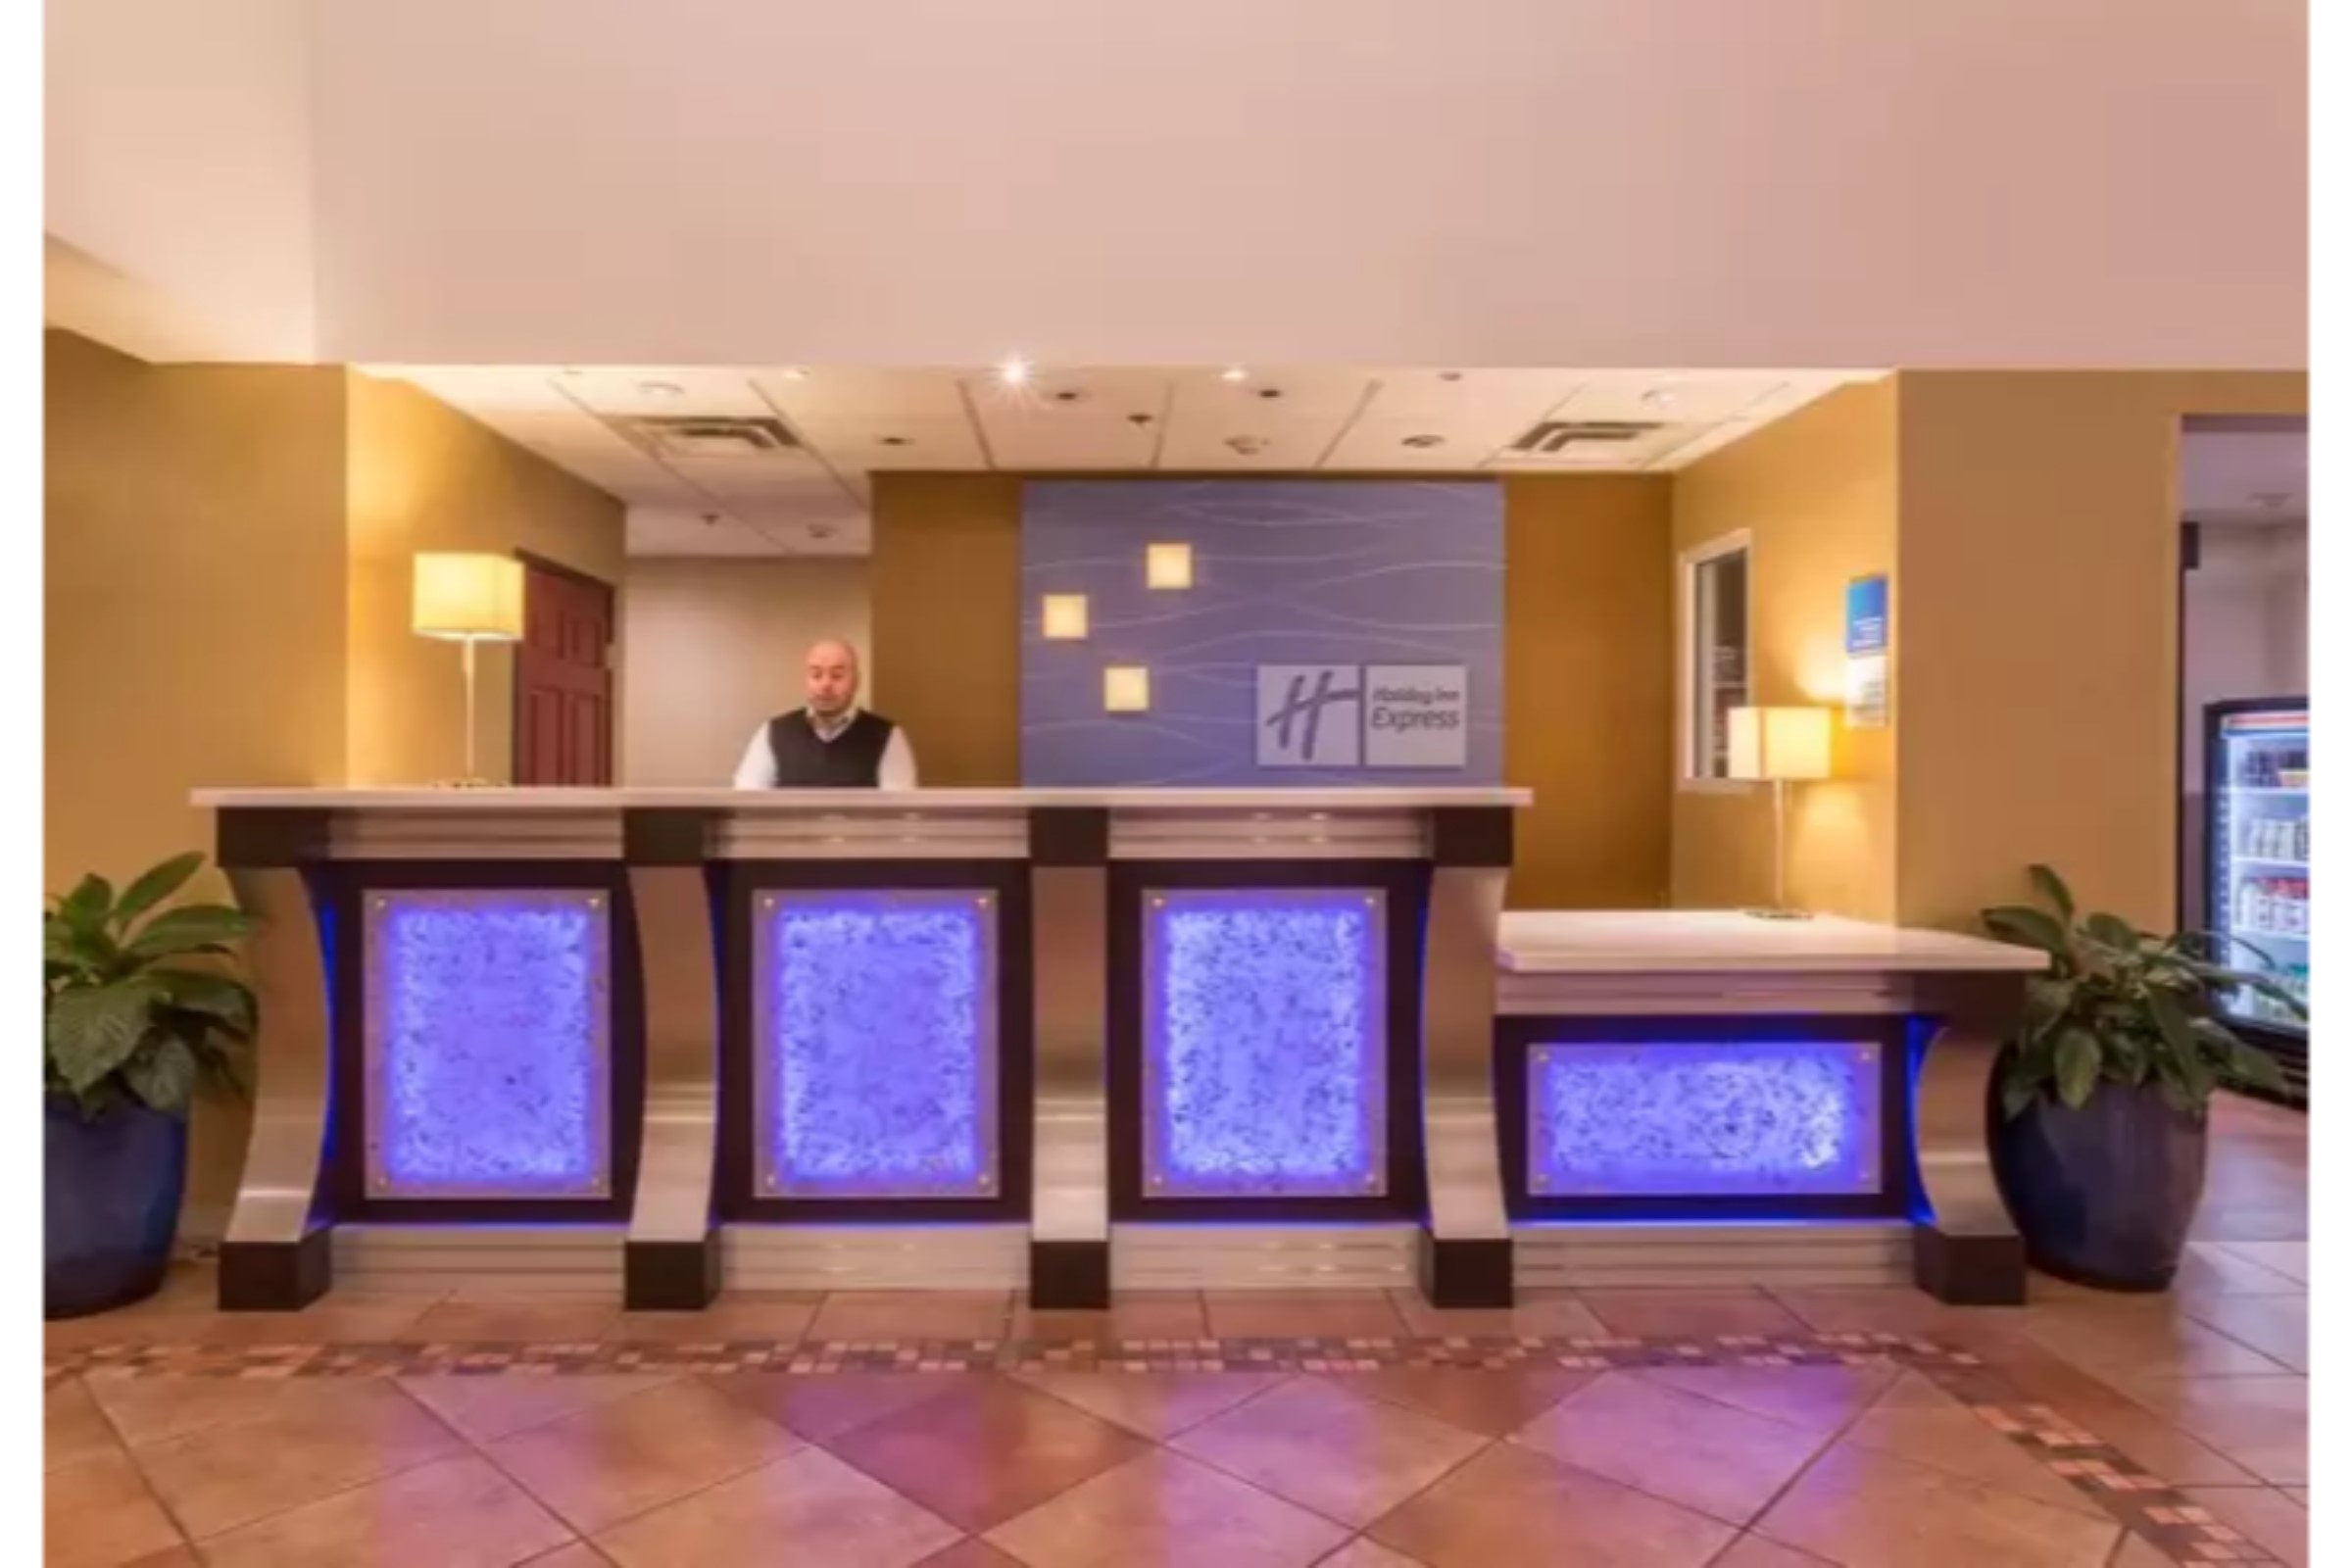 Holiday Inn Express & Suites Manteca City Center